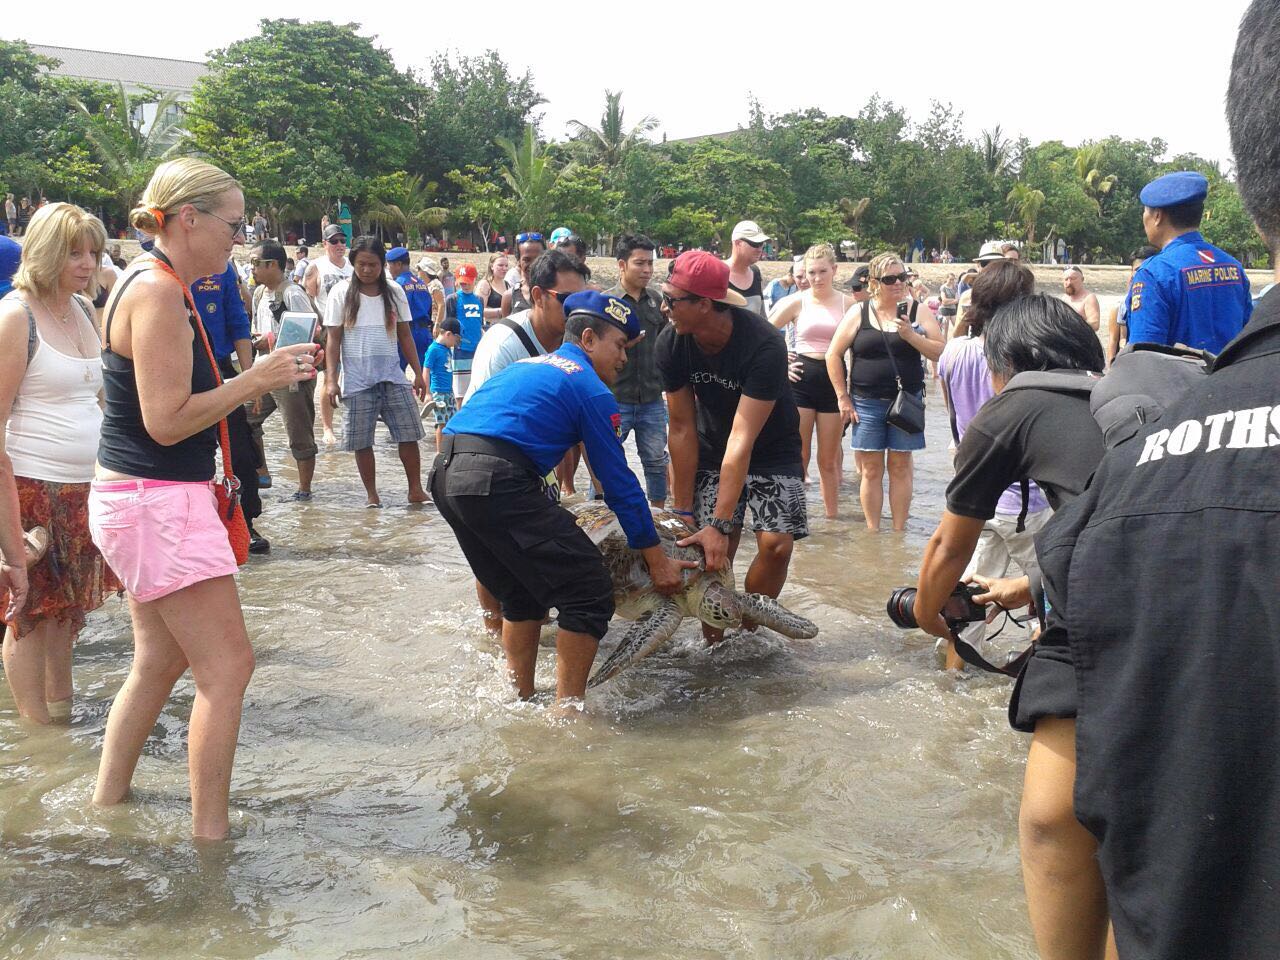 Petugas TCEC Serang, dibantu Polisi dan relawan melepasliarkan 31 ekor penyu hijau hasil penangkapan penyelundupan di Pantai Kuta Bali, pada Kamis (14/04/2015). Sejumlah turis terlihat turut serta dan memotret kegiatan itu. Foto : TCEC Serang